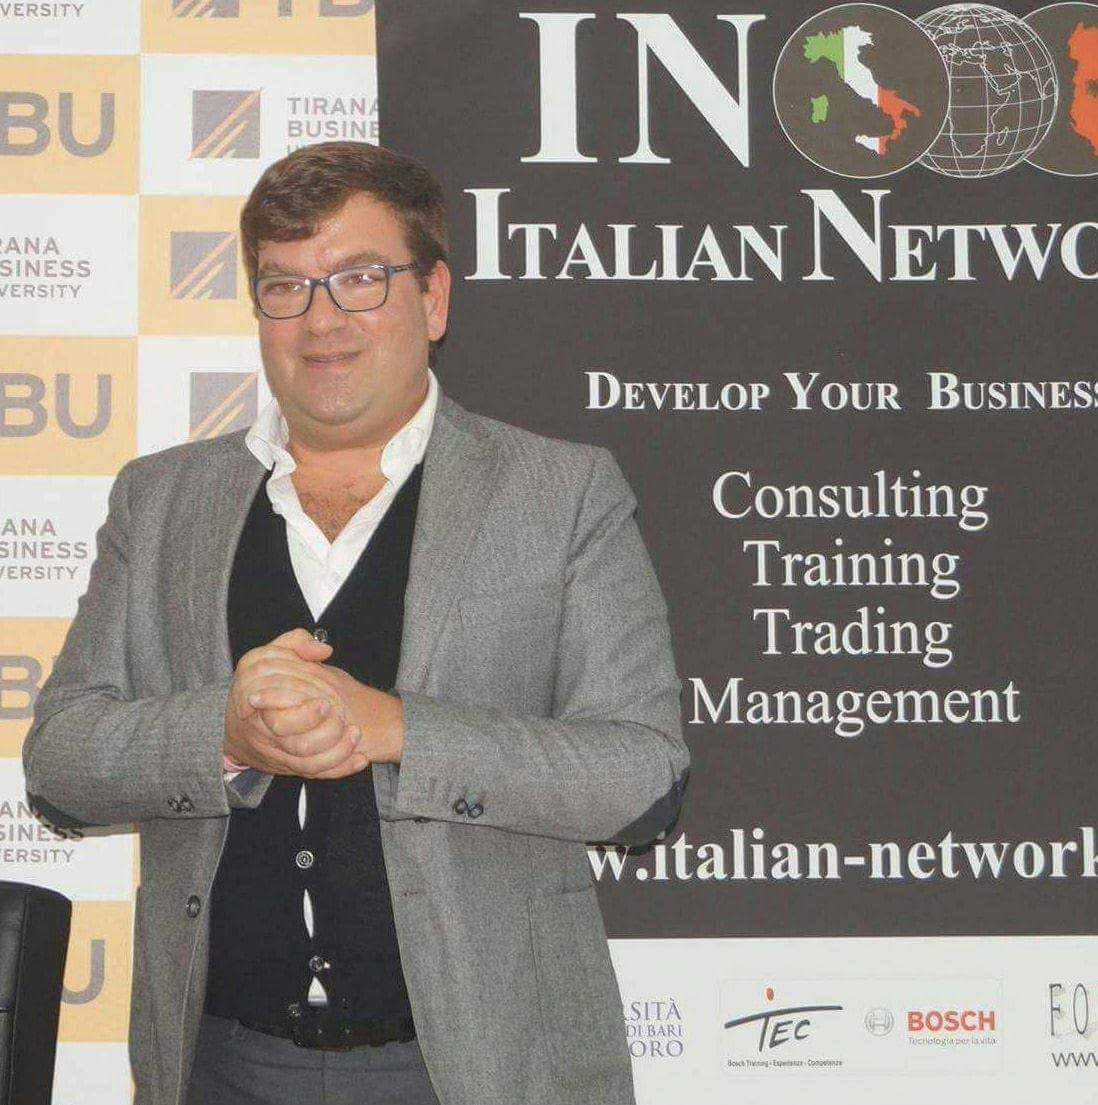 Winner Image - Italian Network